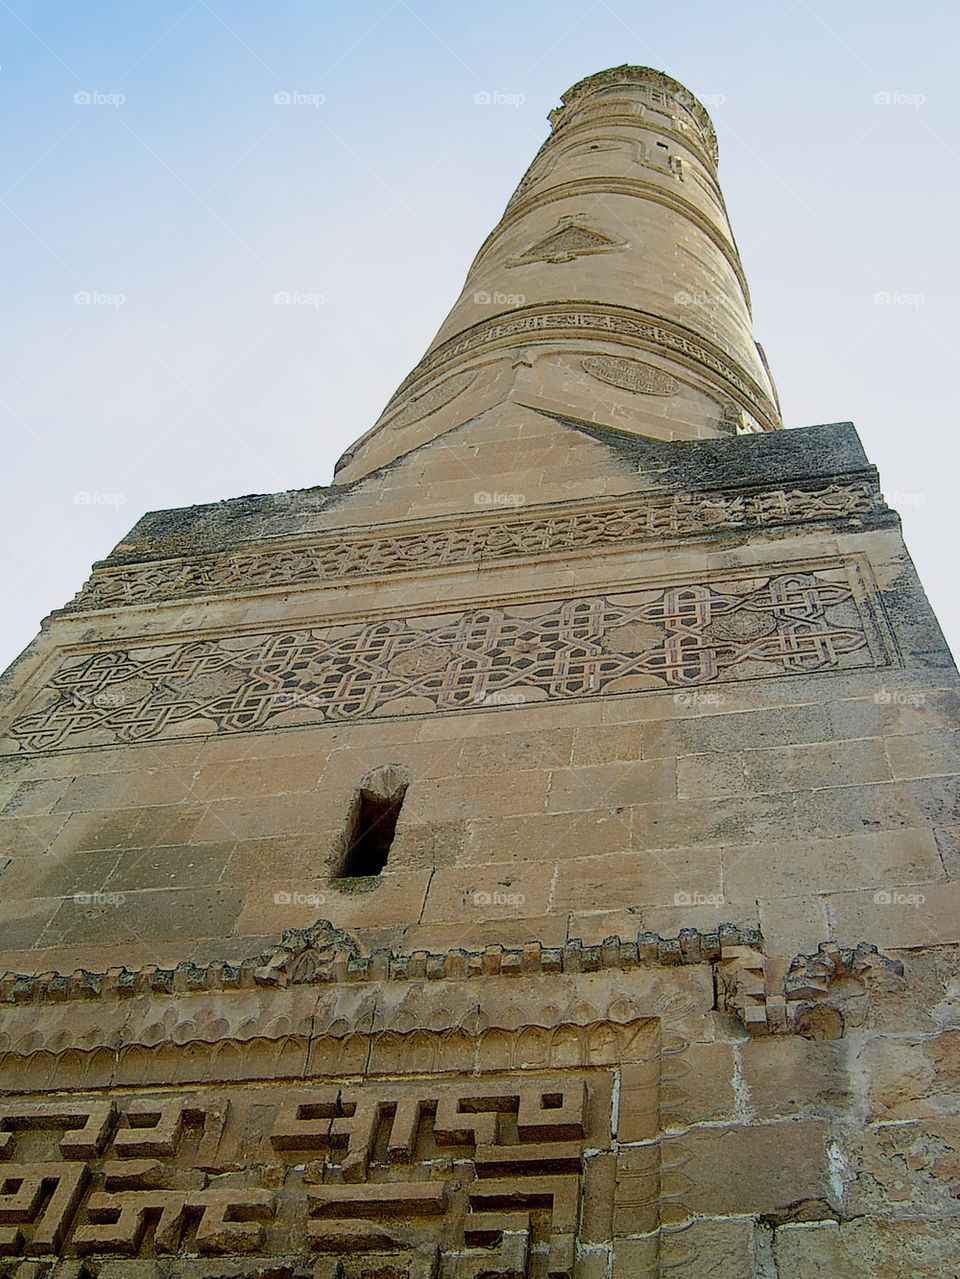 The Mosque of Hasankeyf